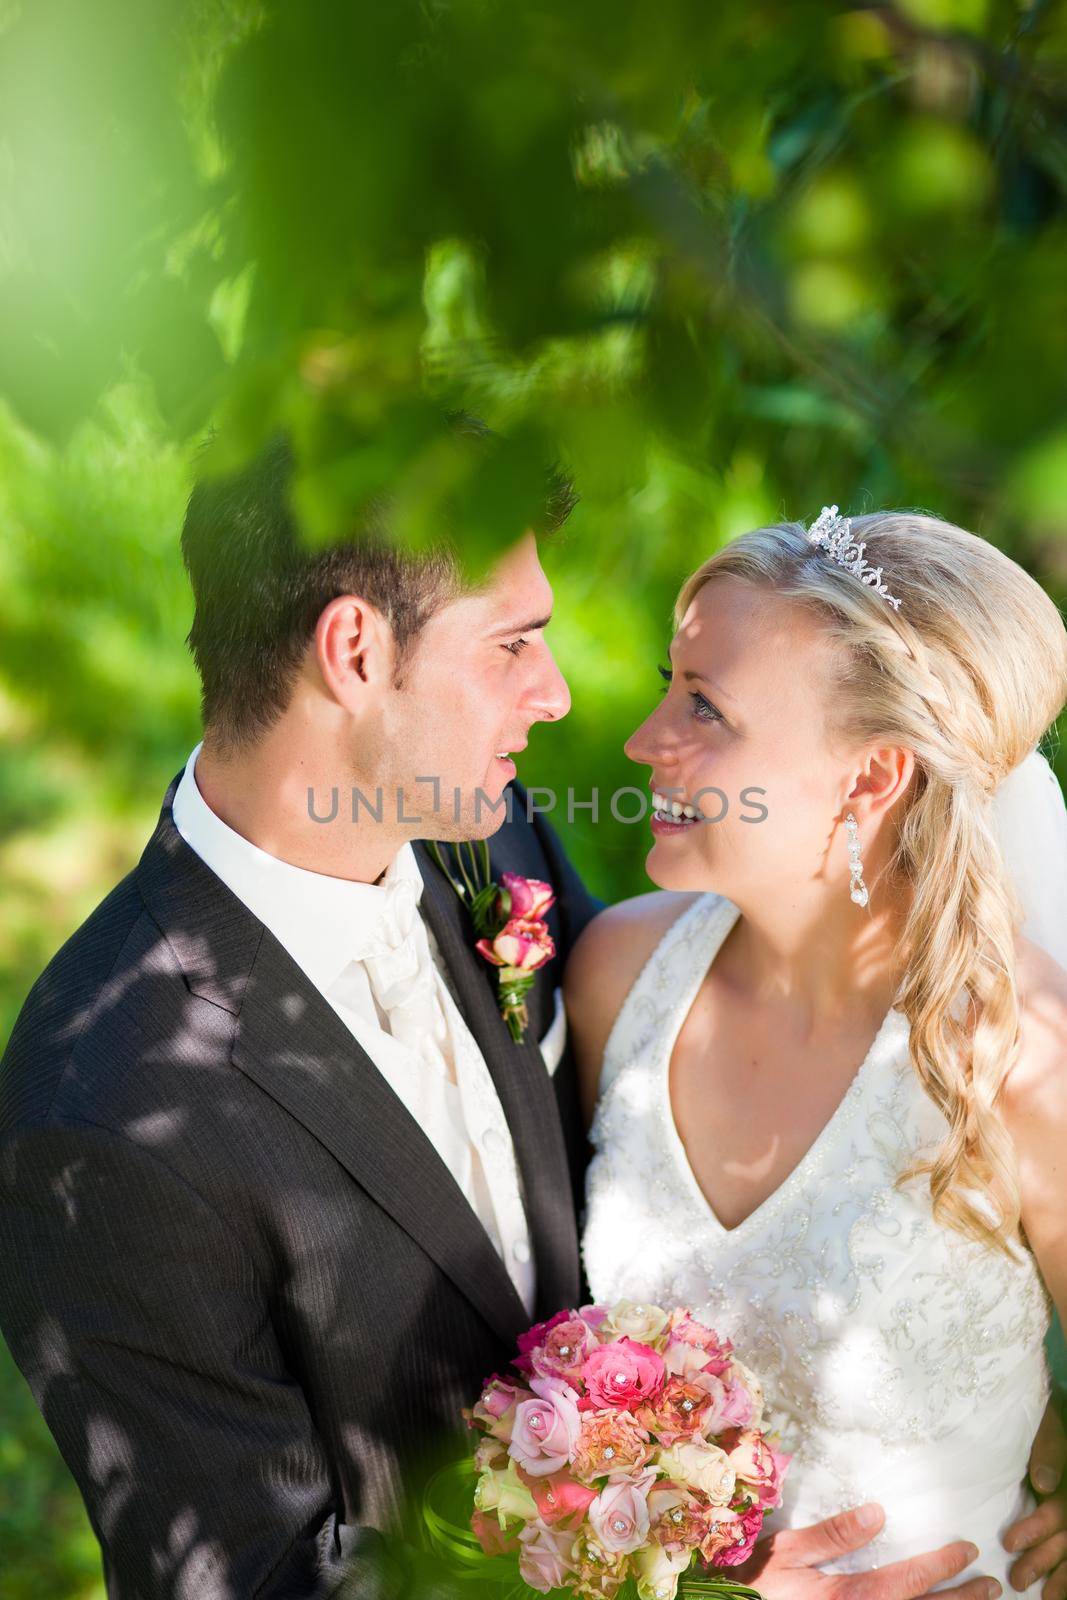 Wedding couple embracing each other moment of joy